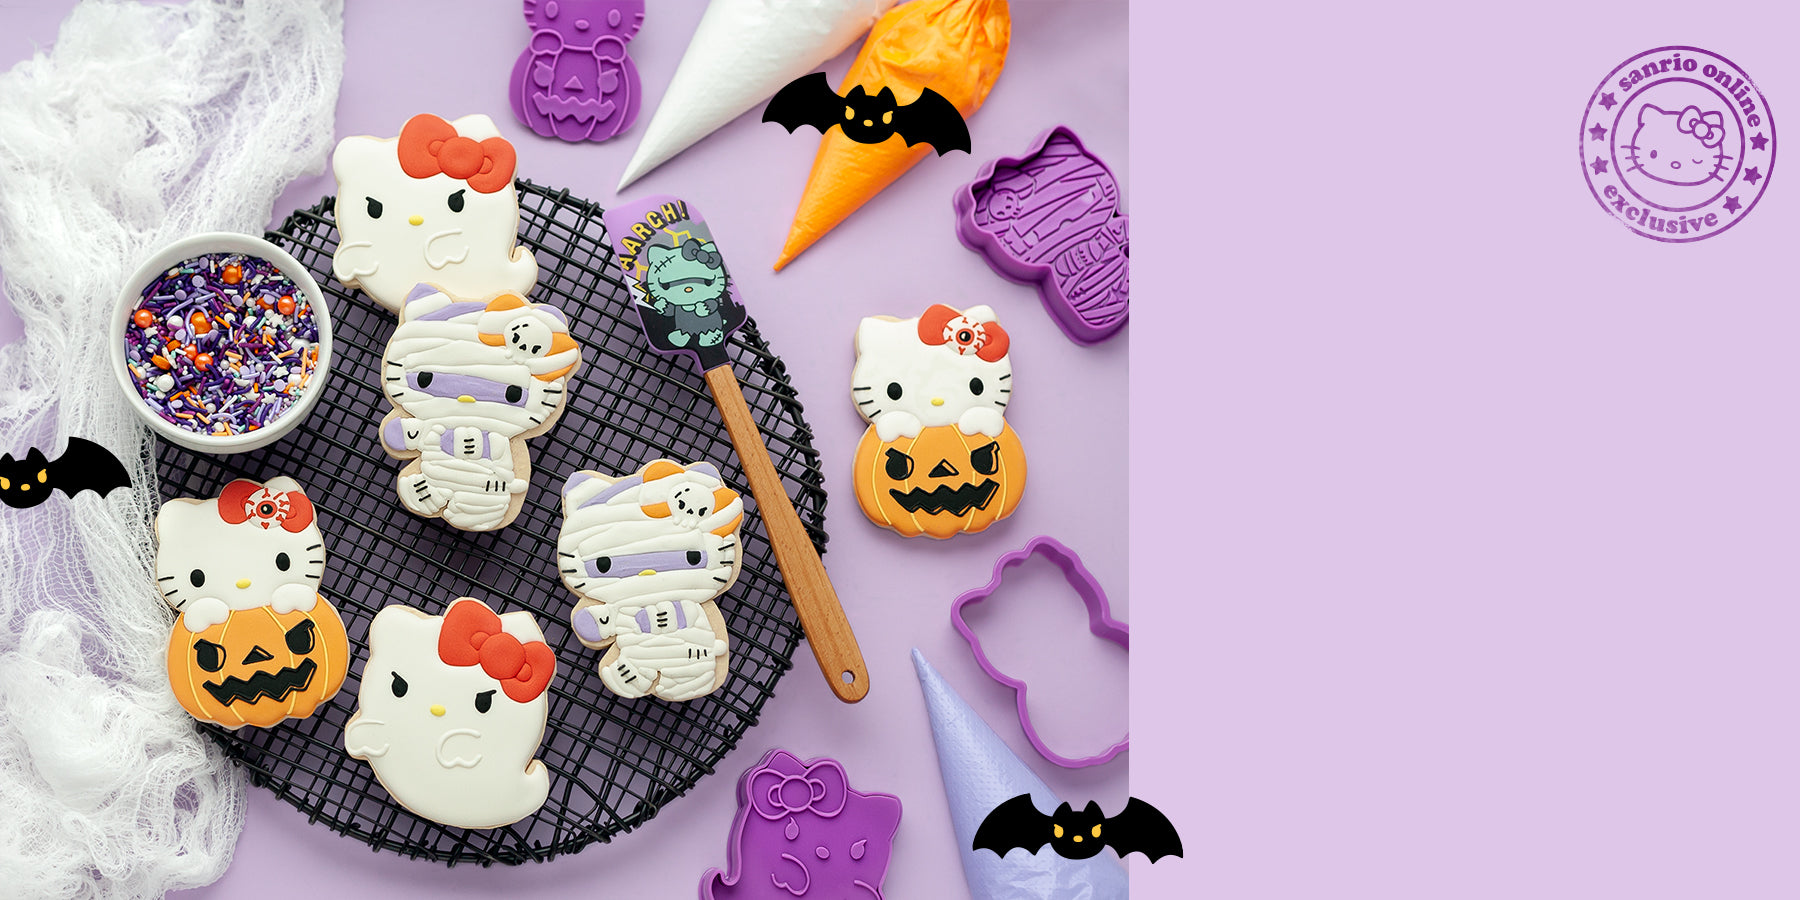 Handstand Kitchen - Halloween Hello Kitty Cookies